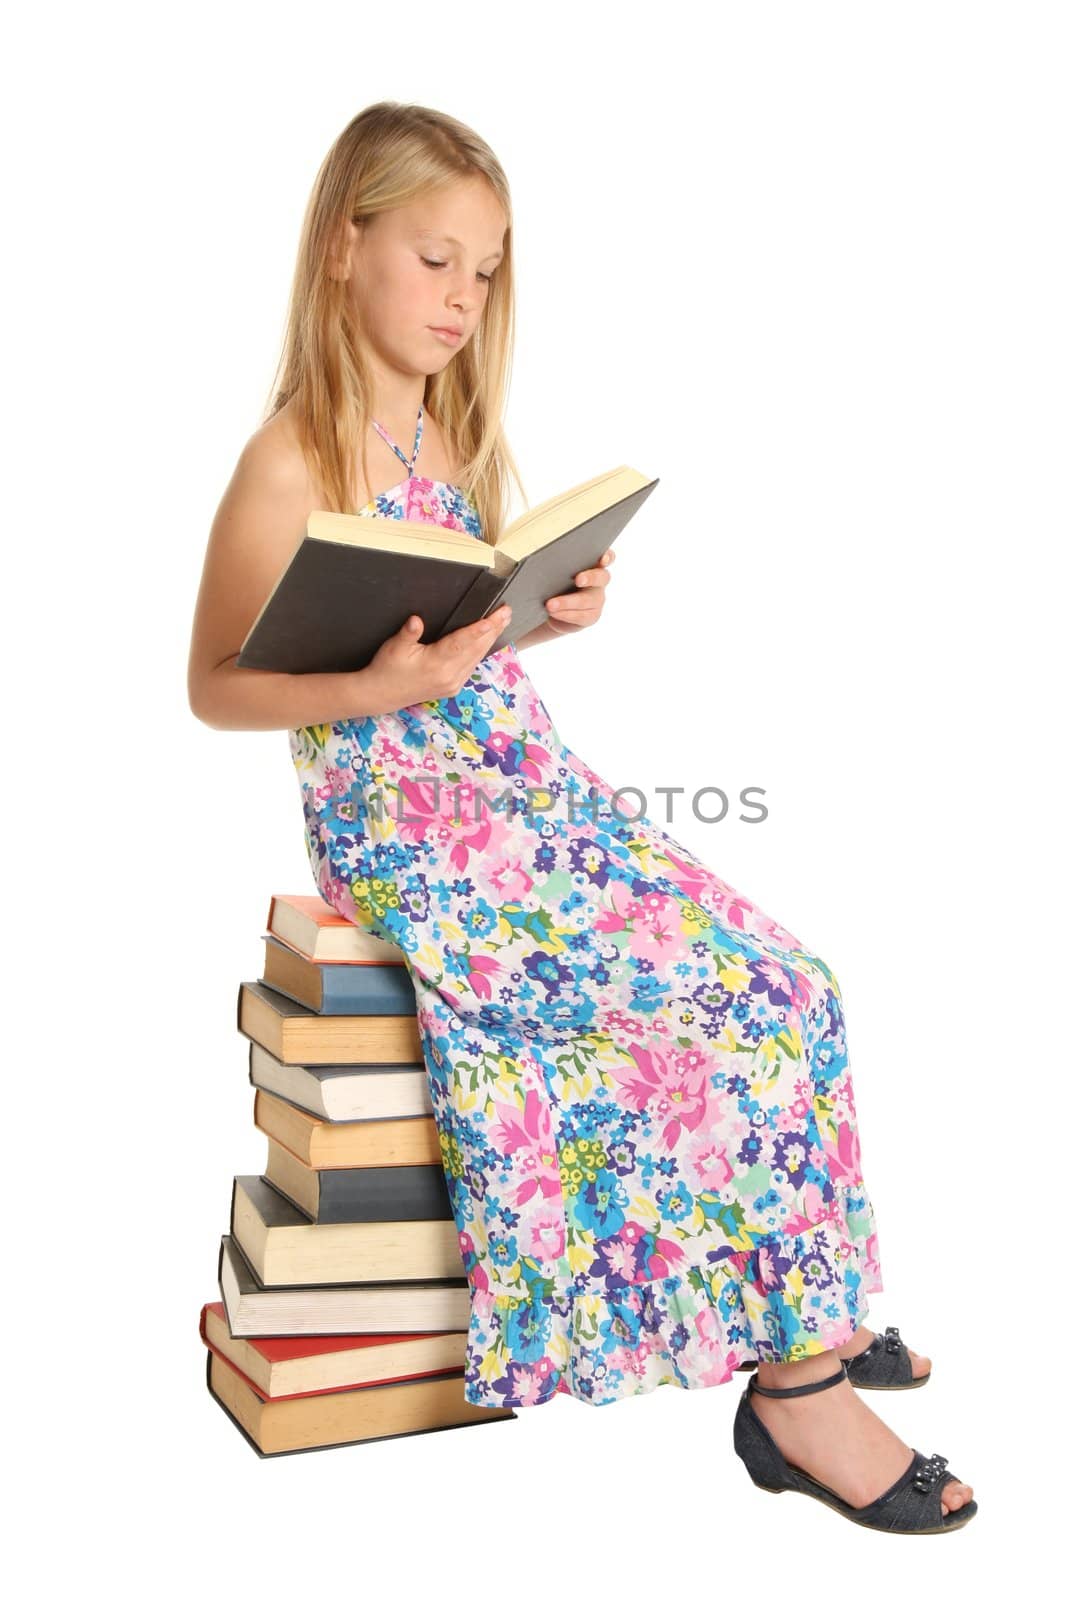 Cute School Girl Sitting on Books by fouroaks